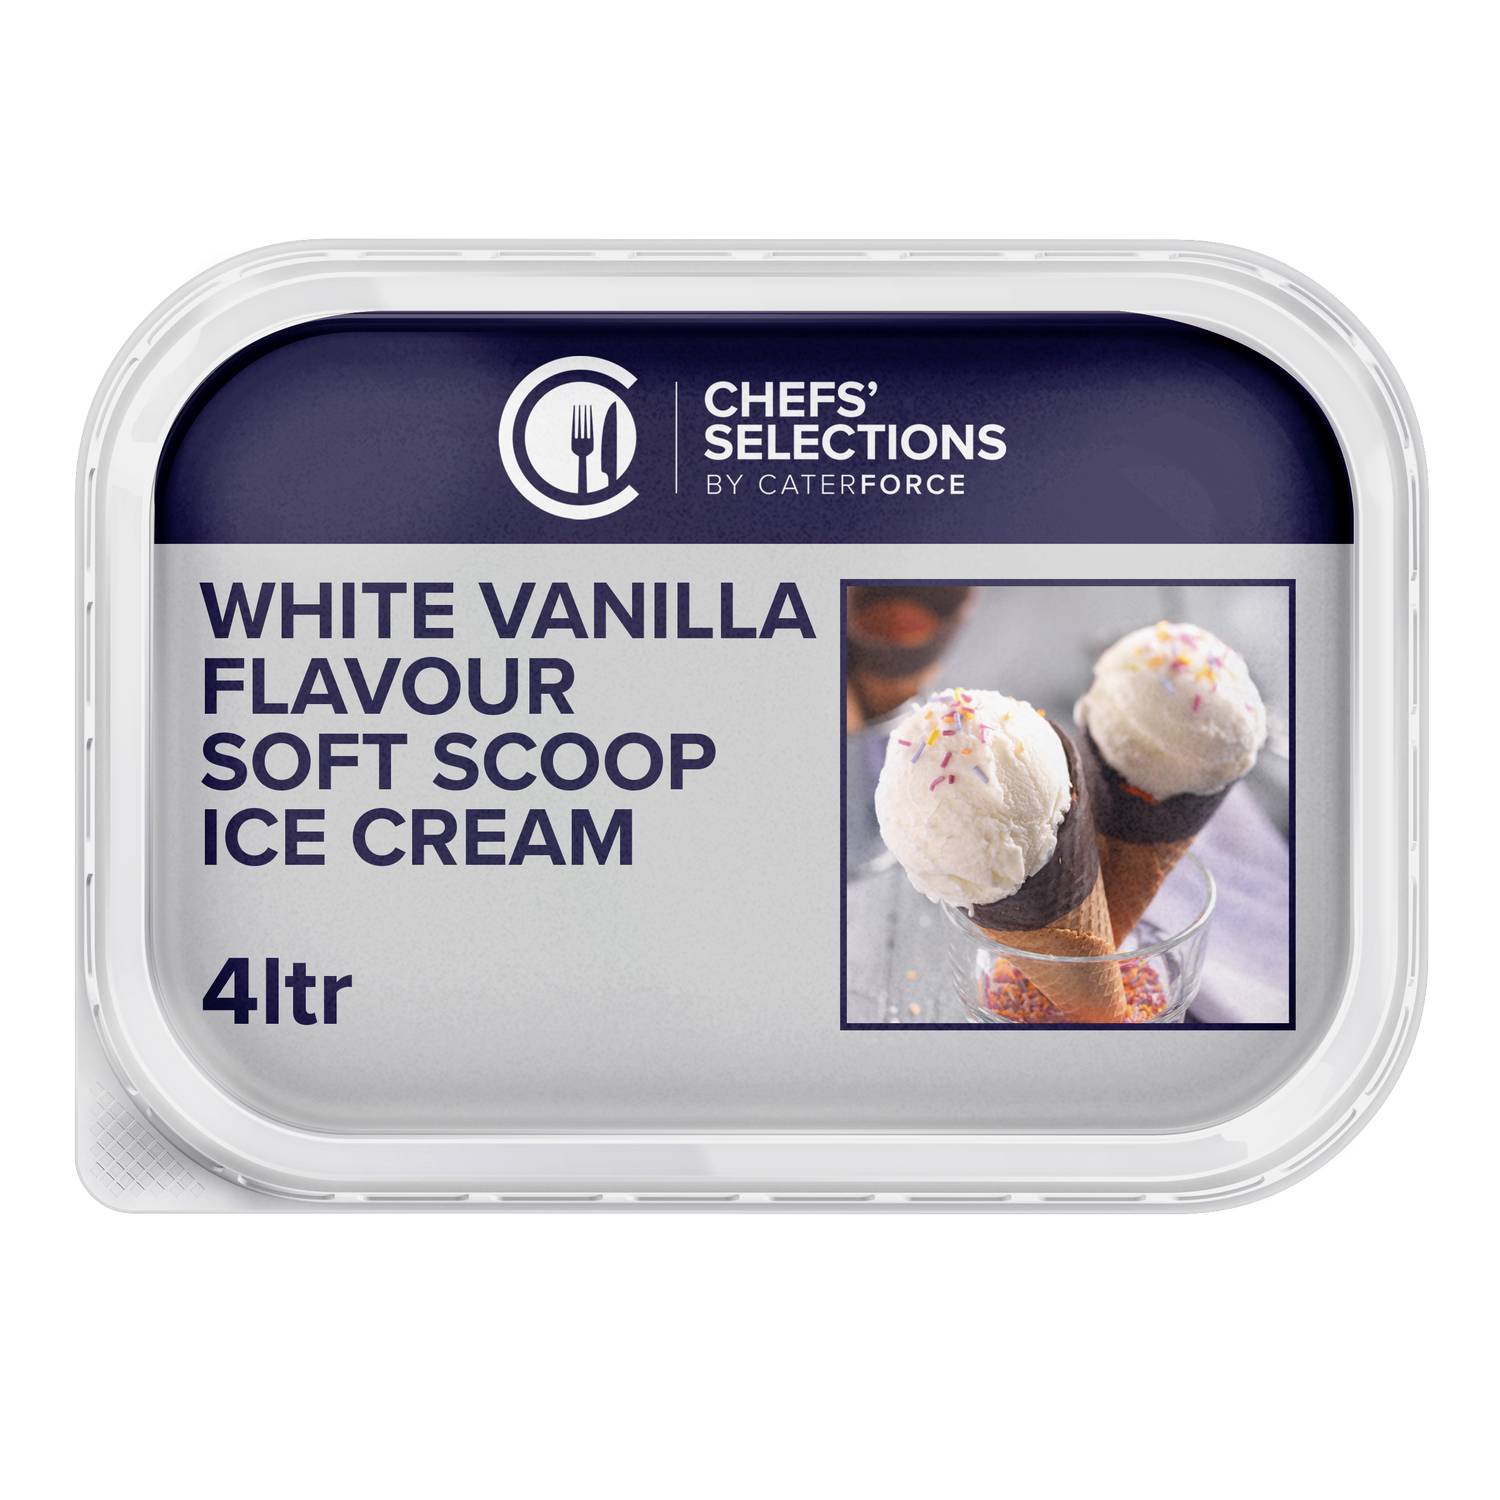 Chefs’ Selections White Vanilla Flavour Soft Scoop Ice Cream (6 x 4L)